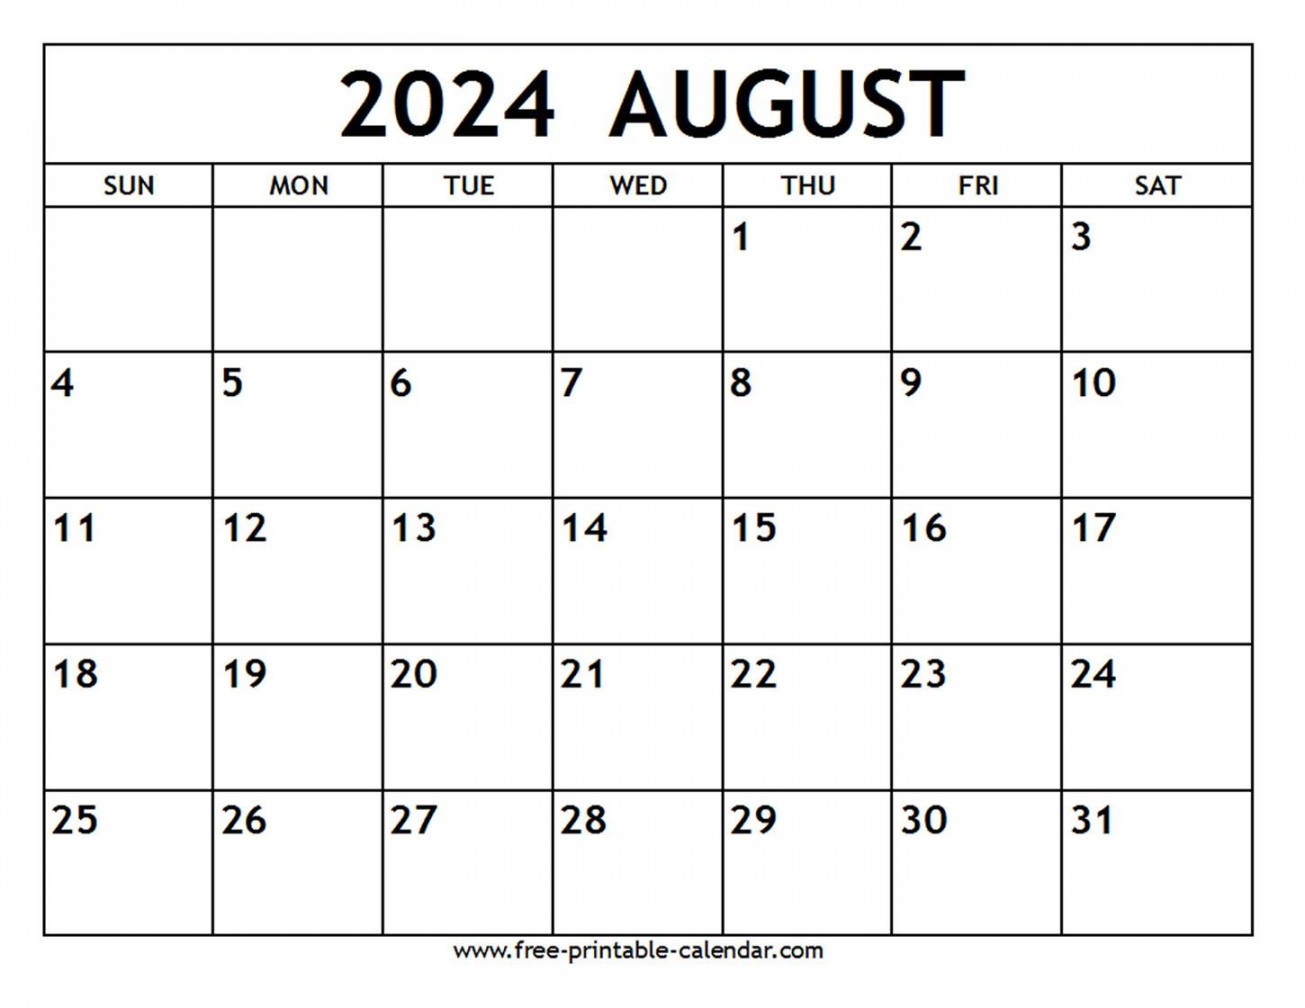 August  Calendar - Free-printable-calendar